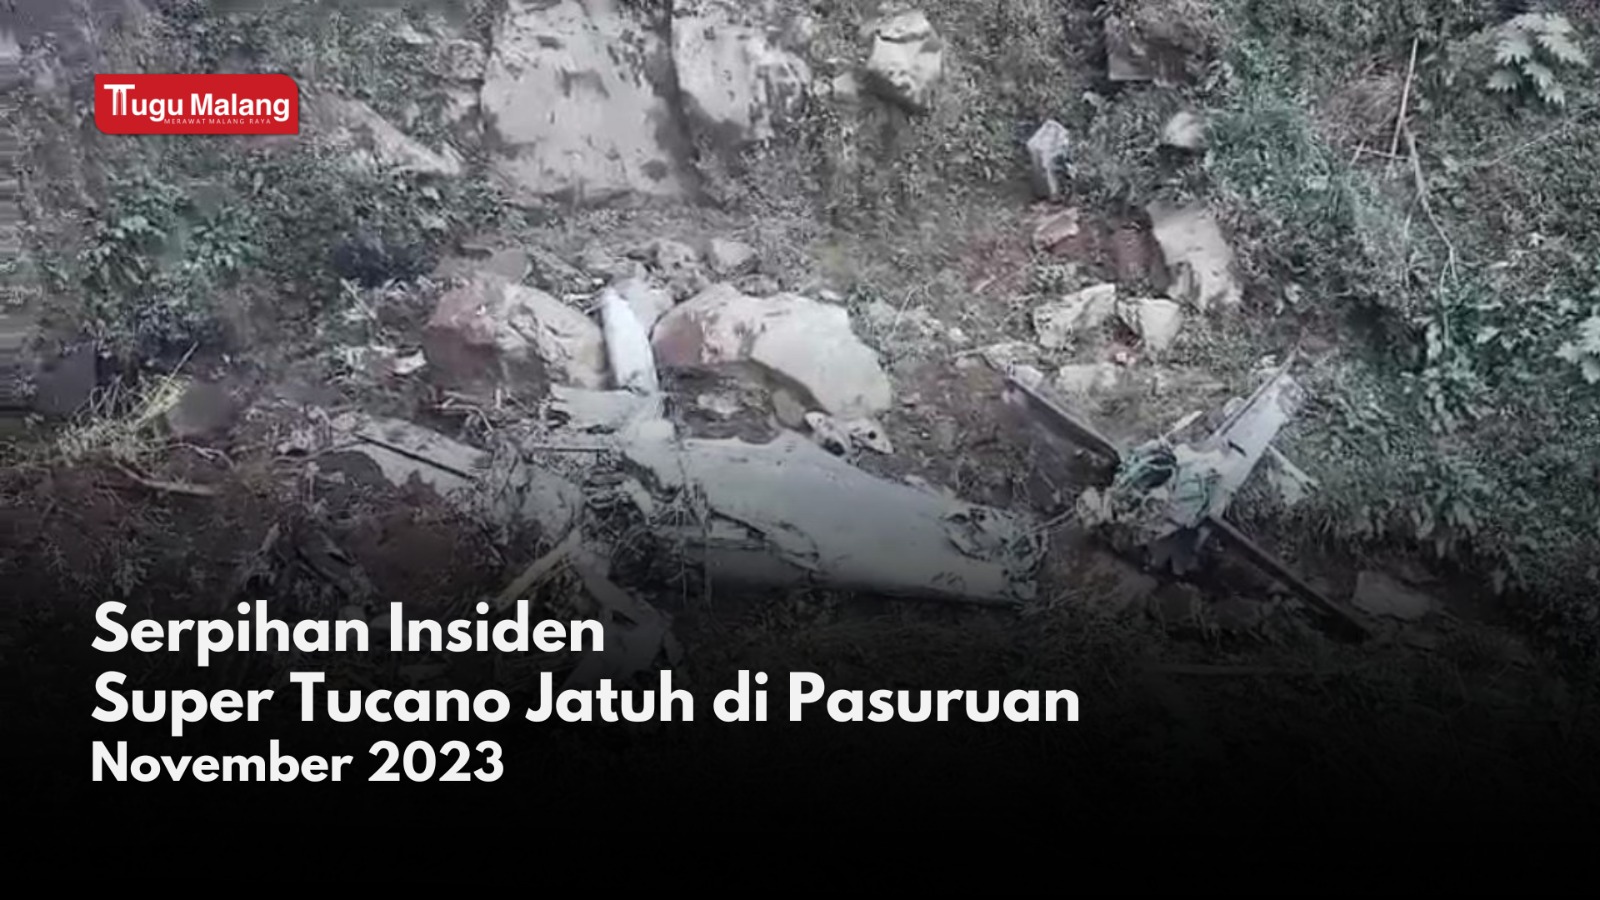 Tampak serpihan dari insiden pesawat super tucano jatuh di Pasuruan, Kamis (16/11/2023).